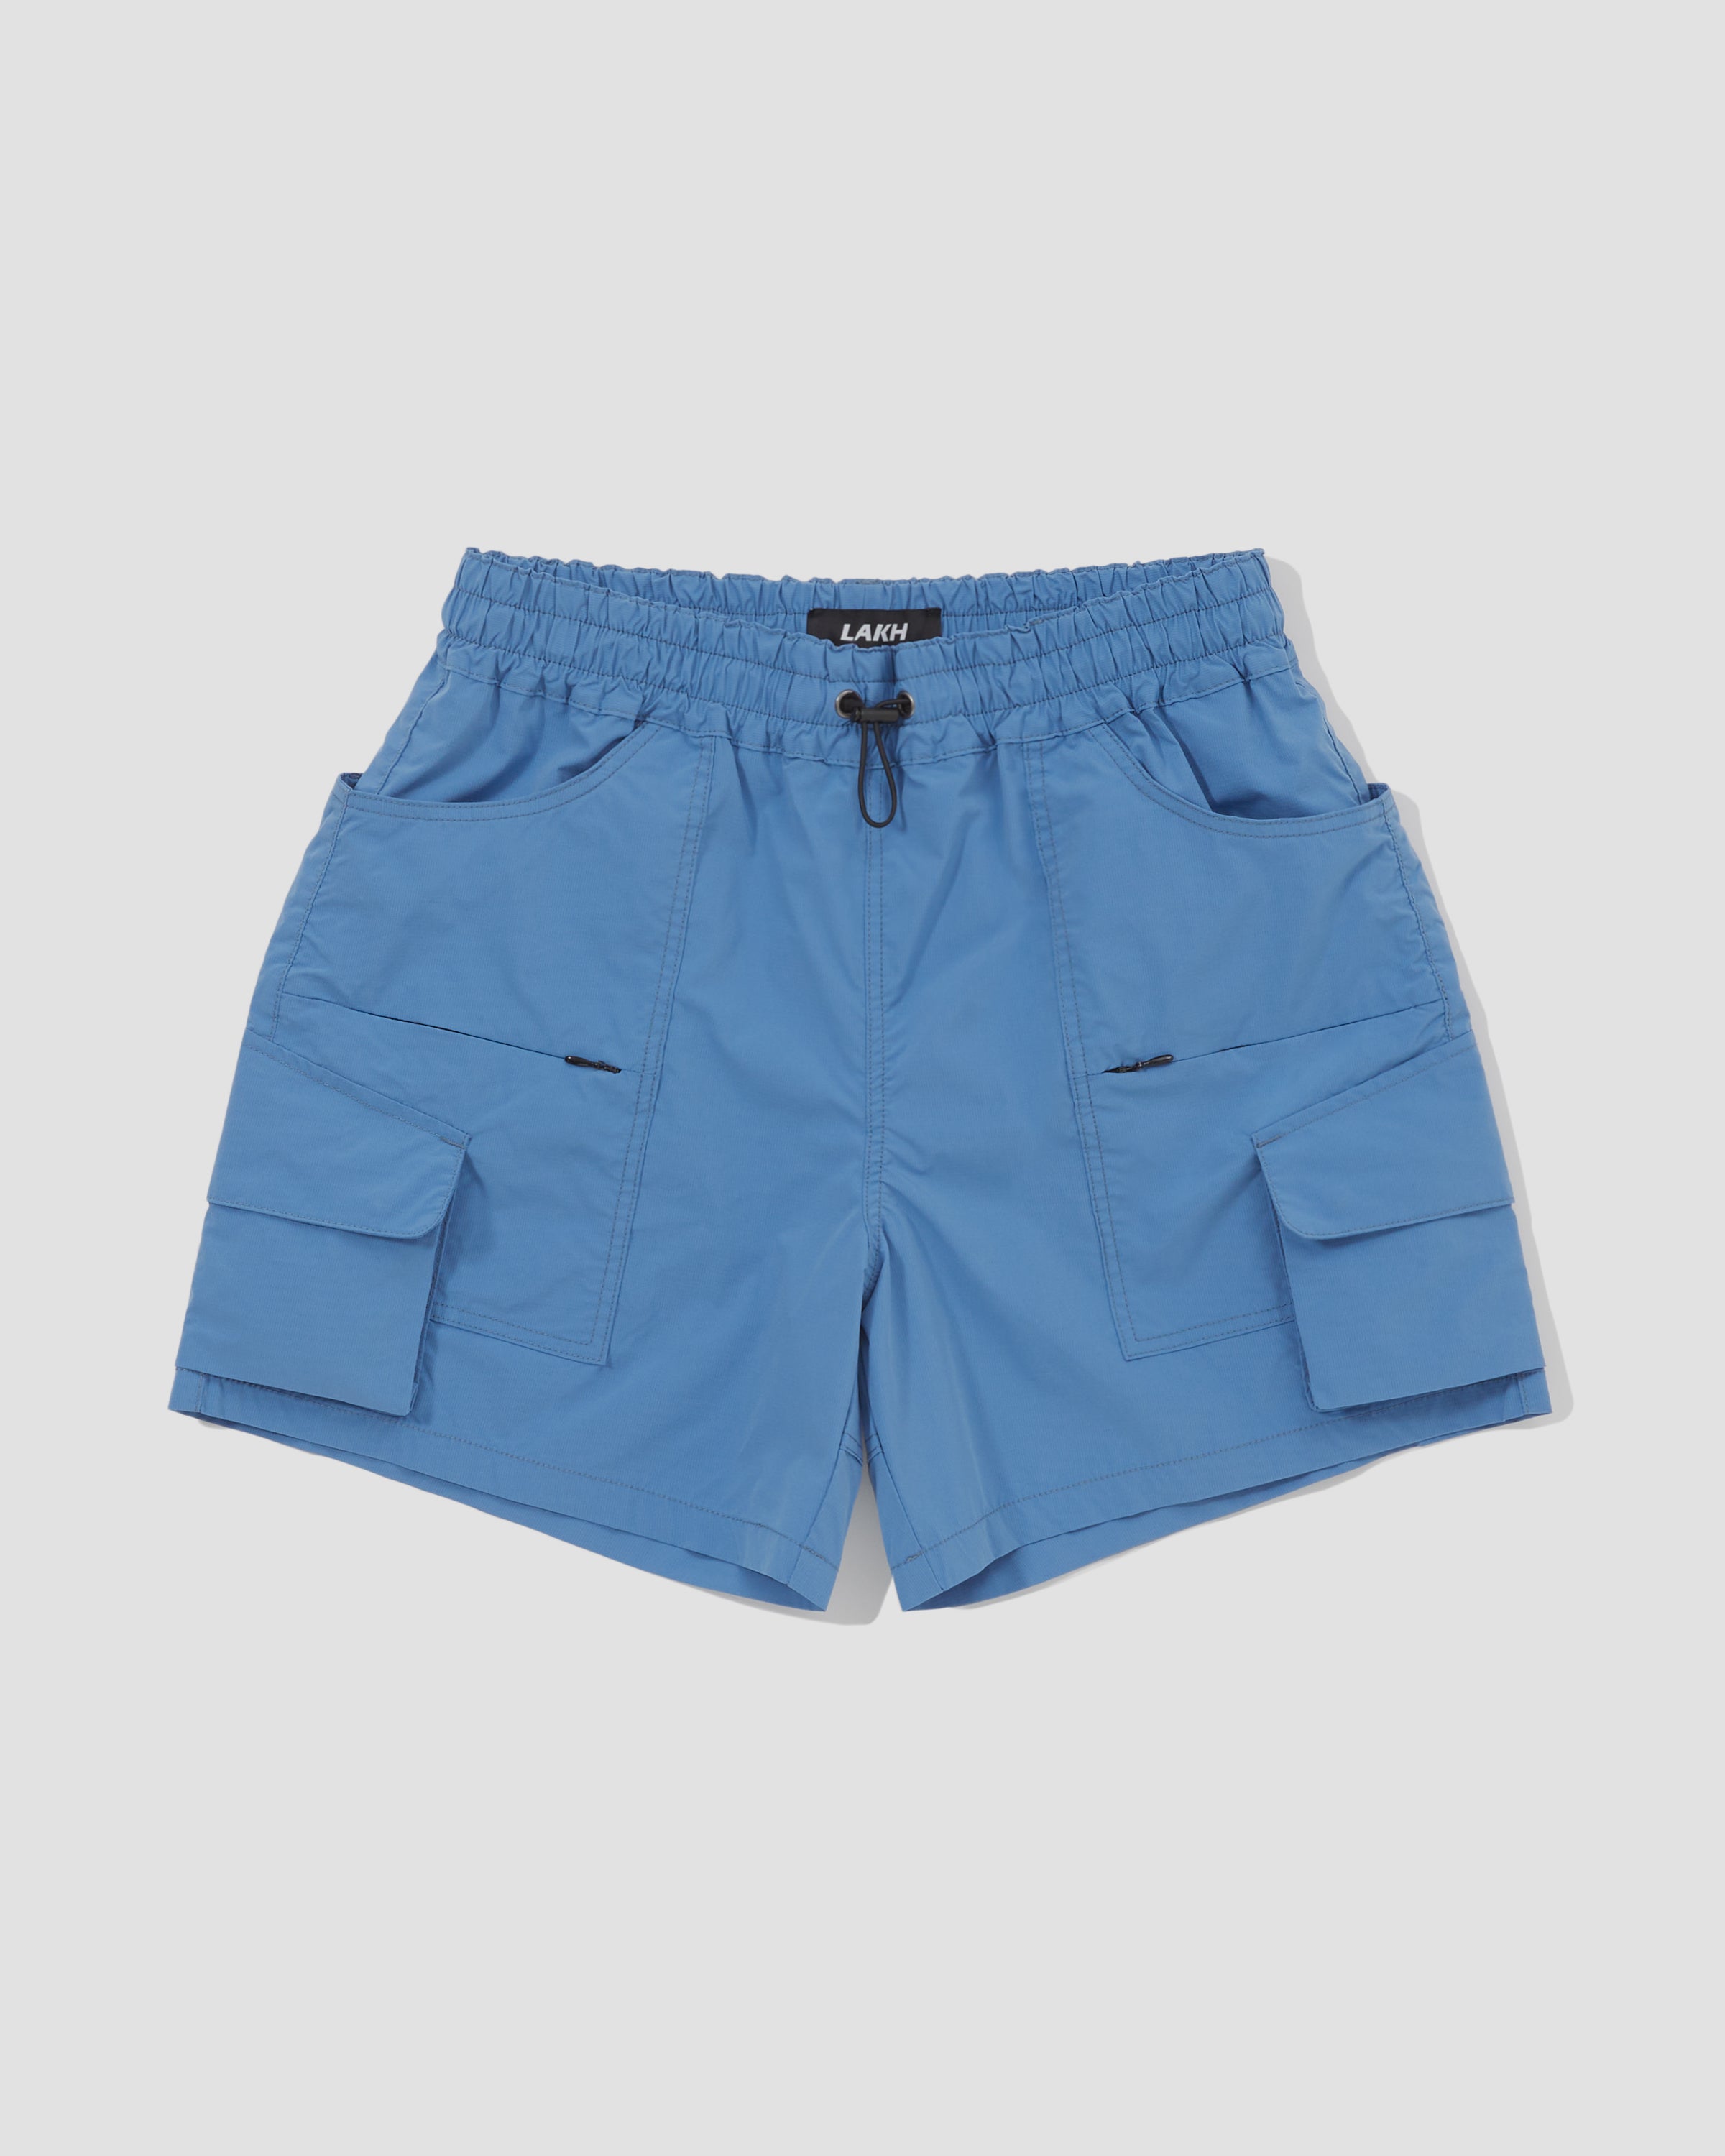 Field Shorts - Blue